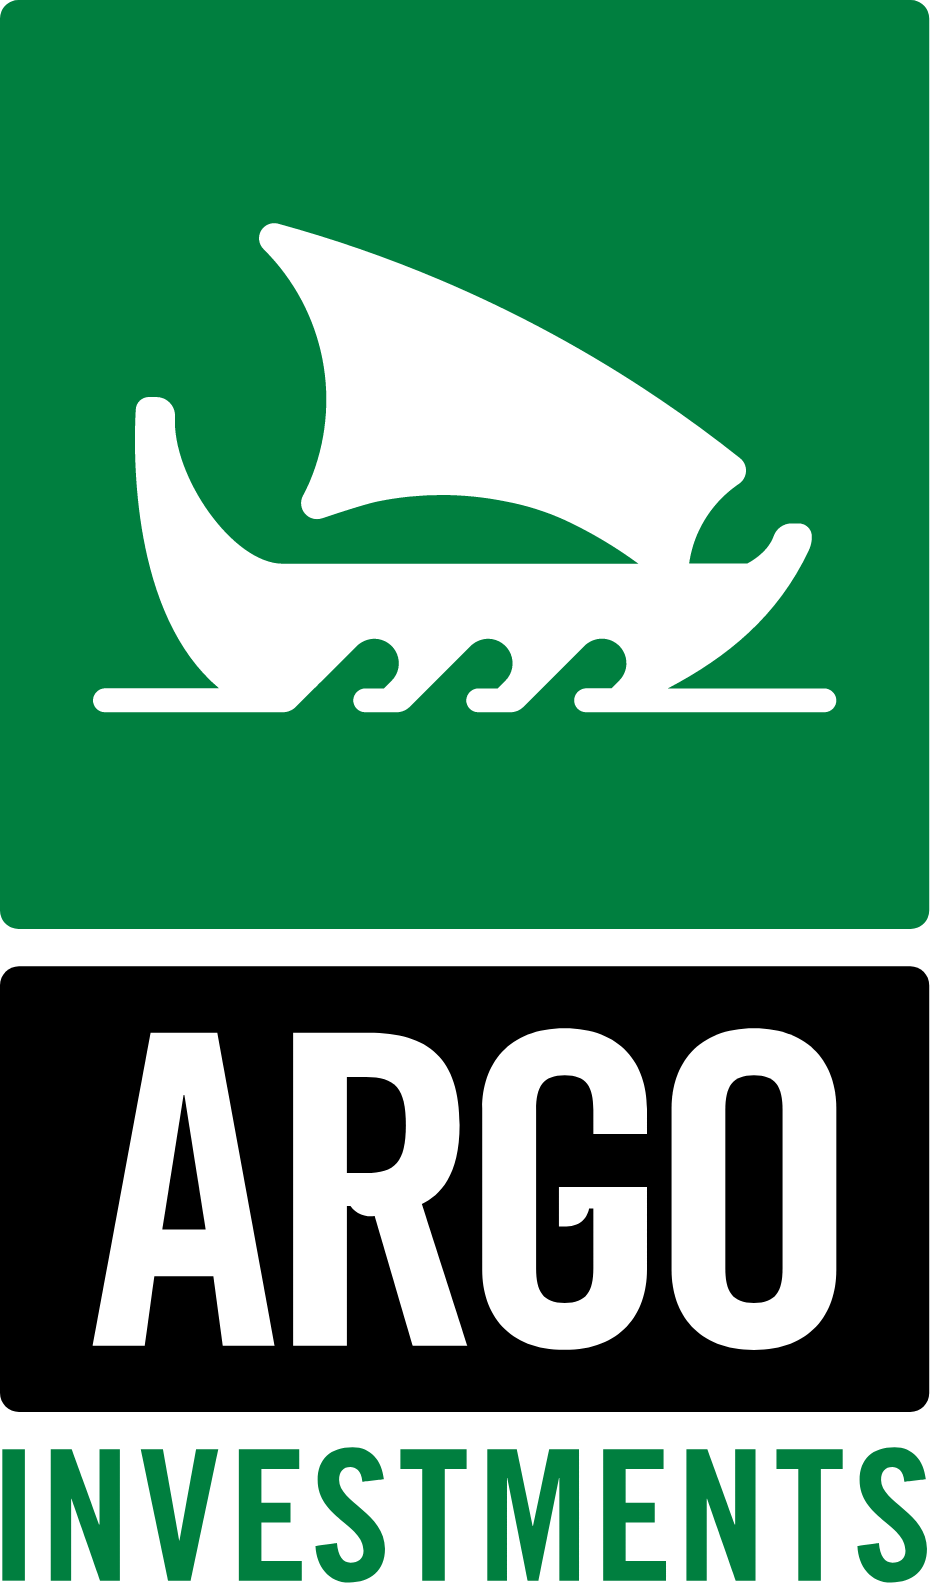 Argo Investments logo large (transparent PNG)